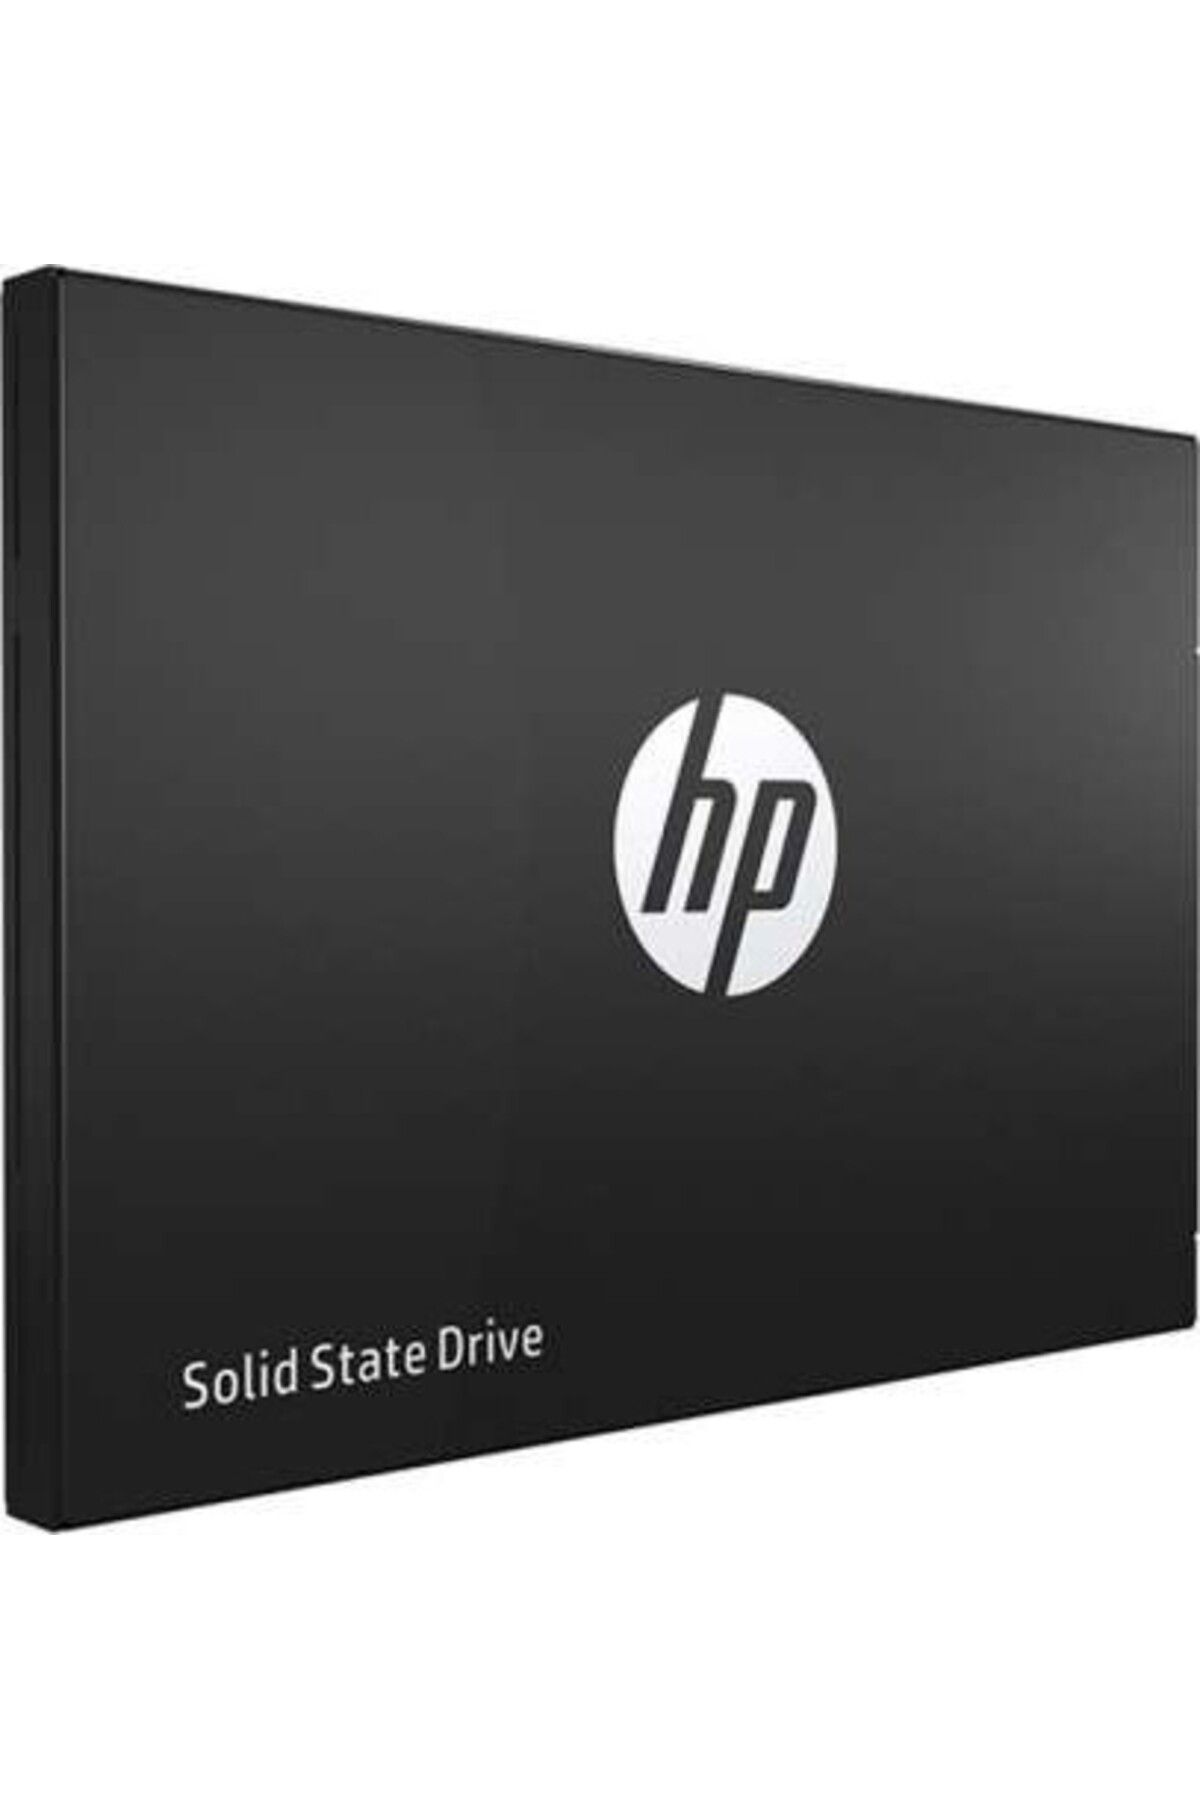 HP 480GB 345M9AA 2.5" 560-490 Dahili Sata S650 Serisi SSD Harddisk